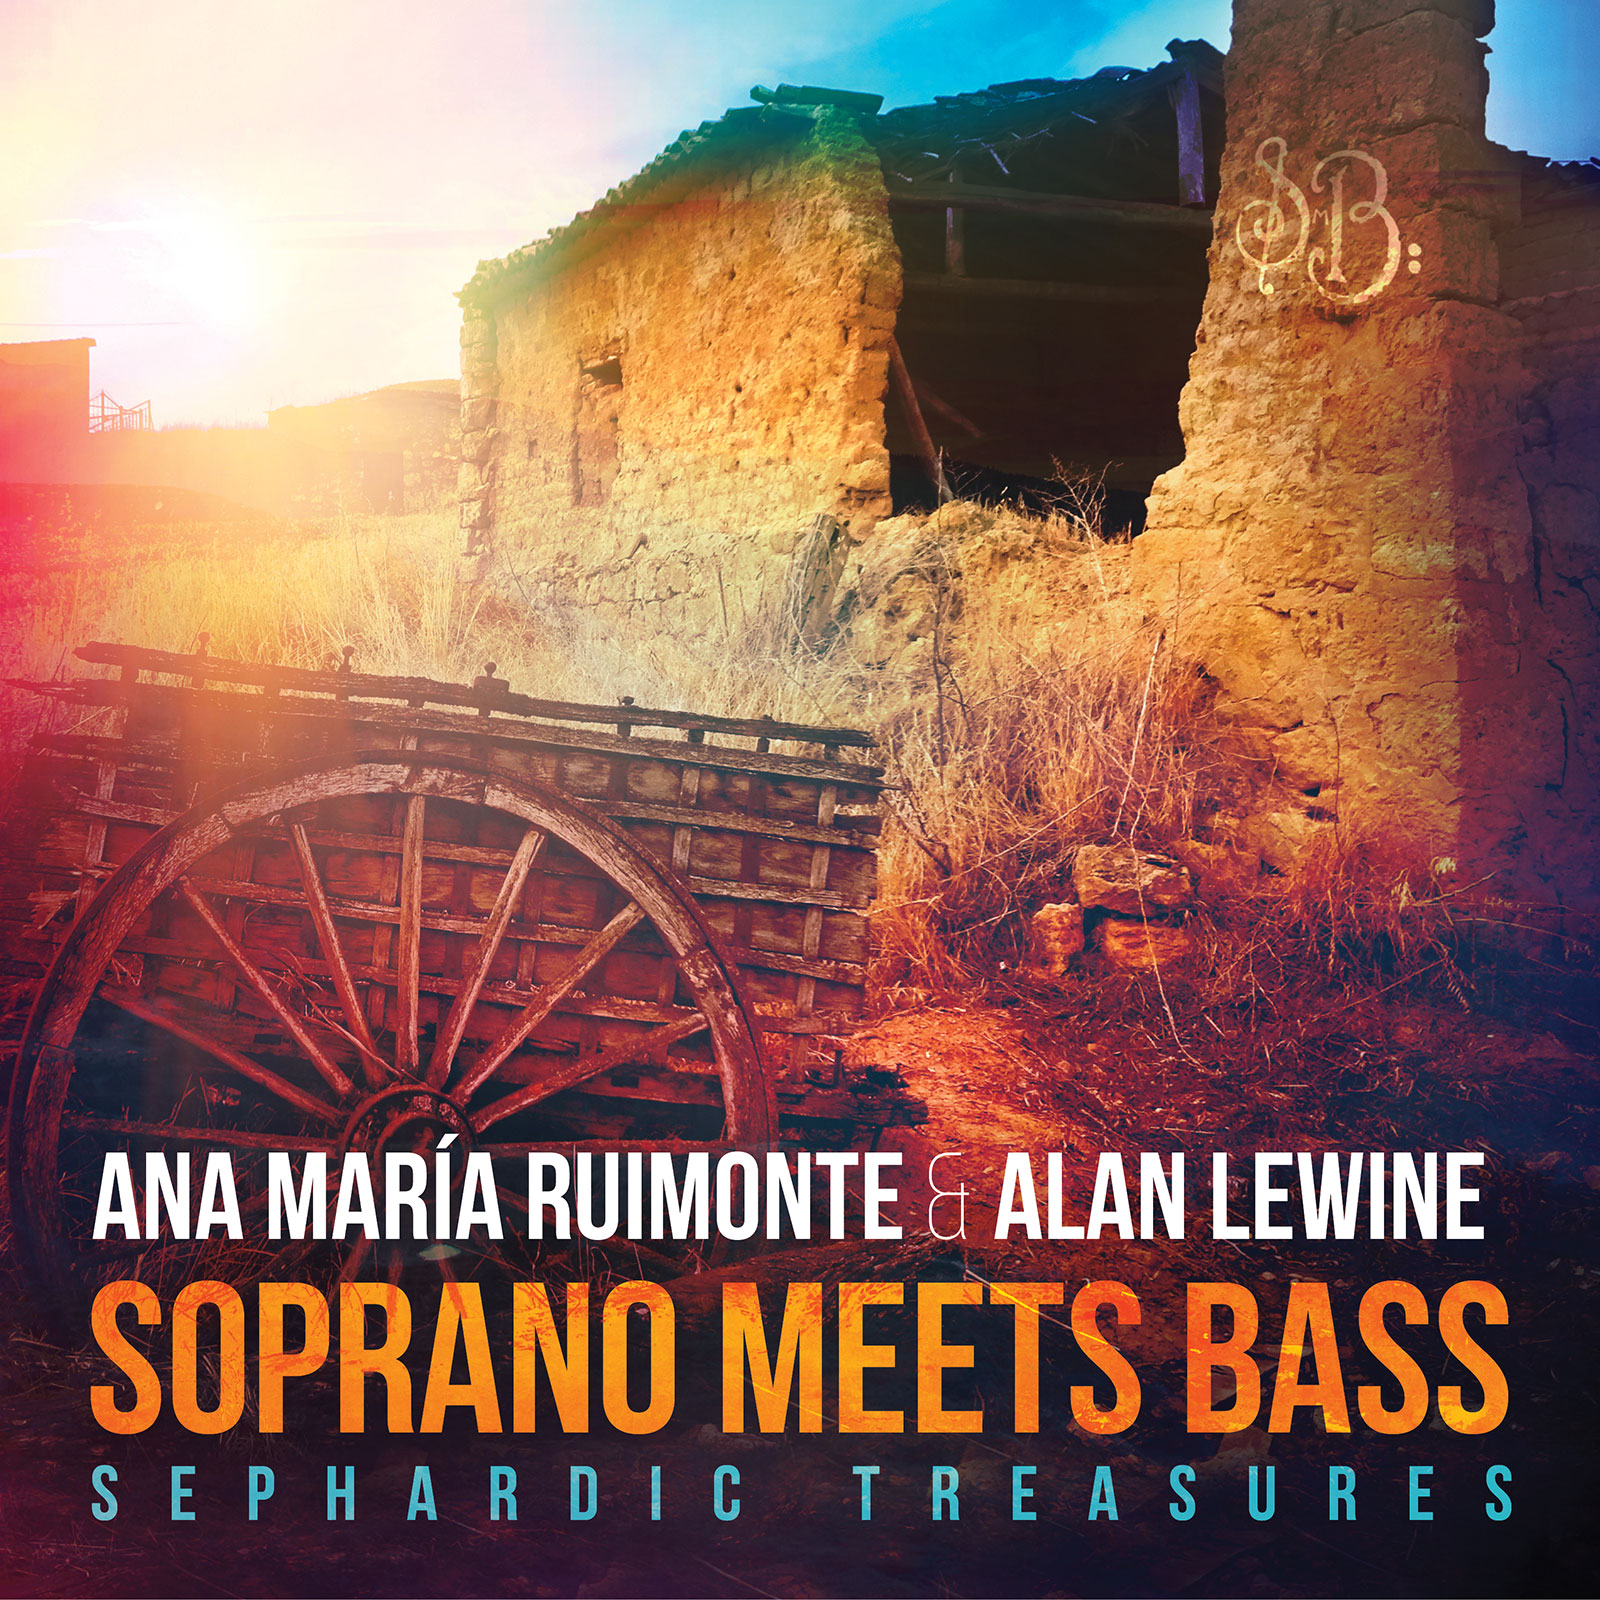 Soprano Meets Bass – Sephardic Treasures - album cover